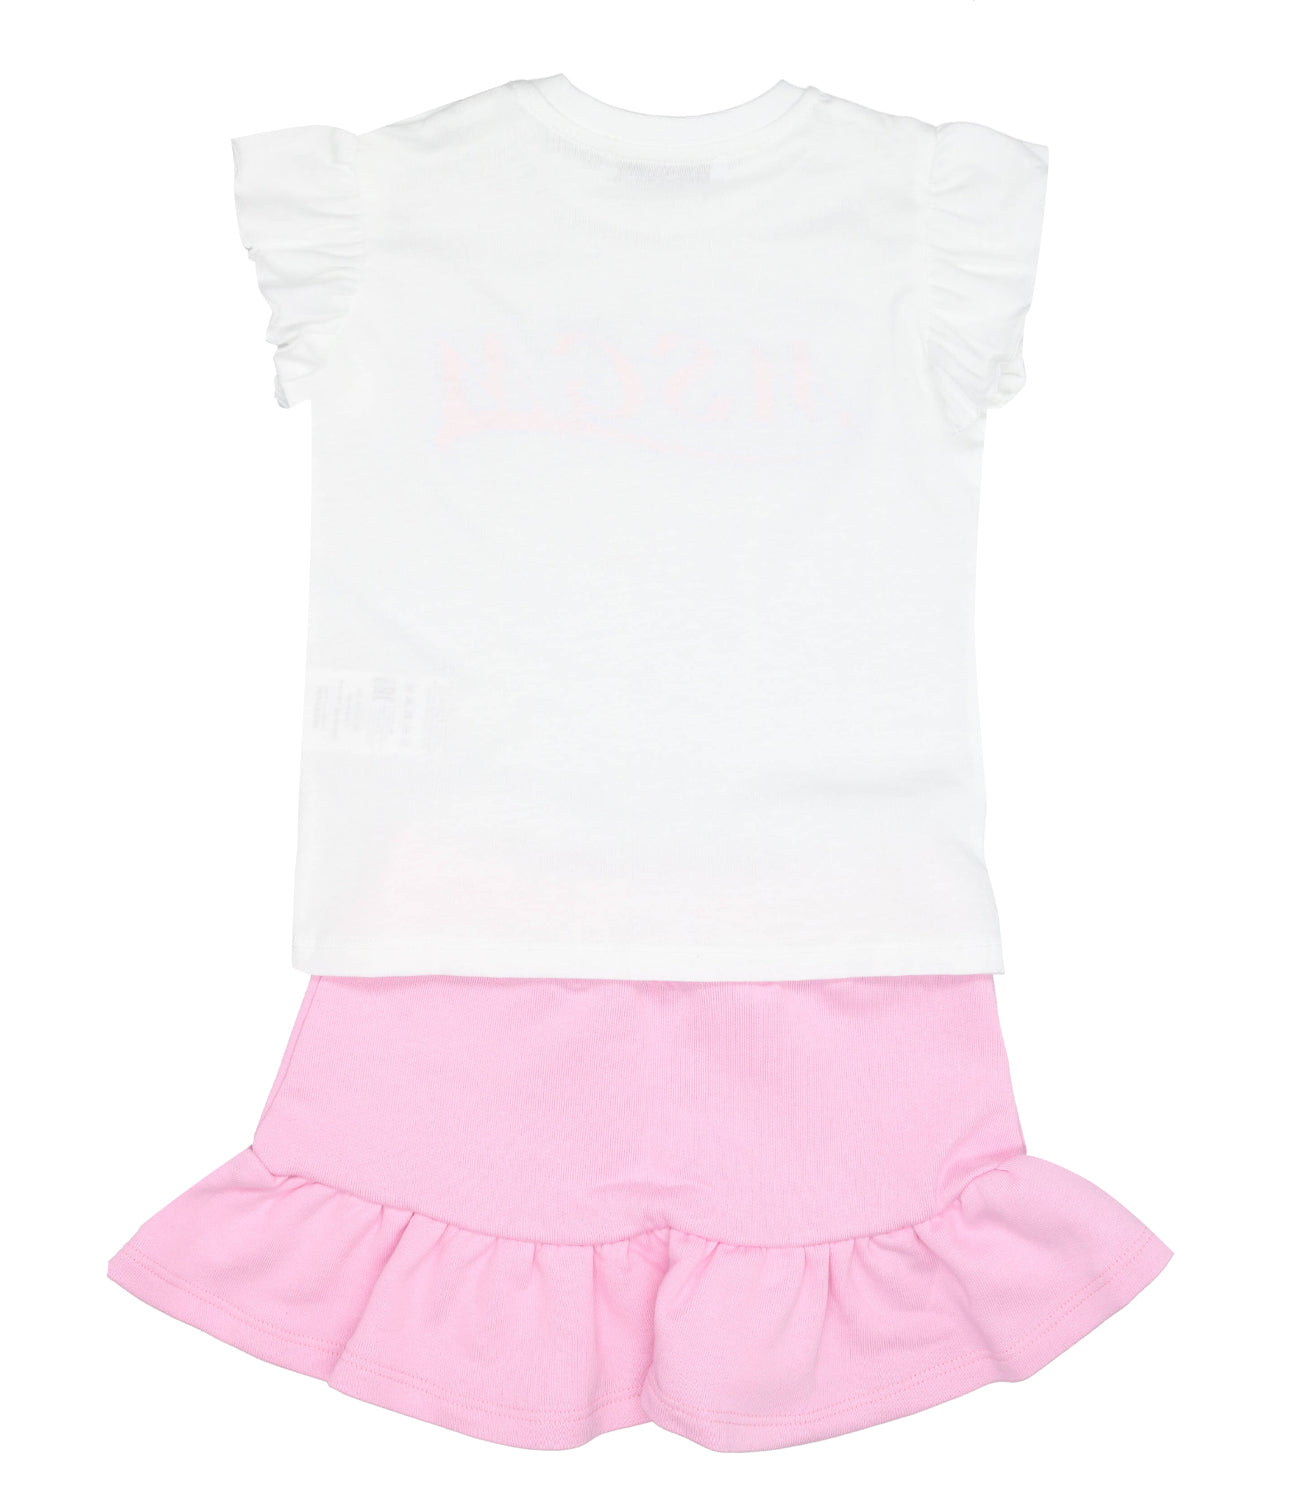 MSGM Kids | Pink and White T-Shirt and Skirt Set